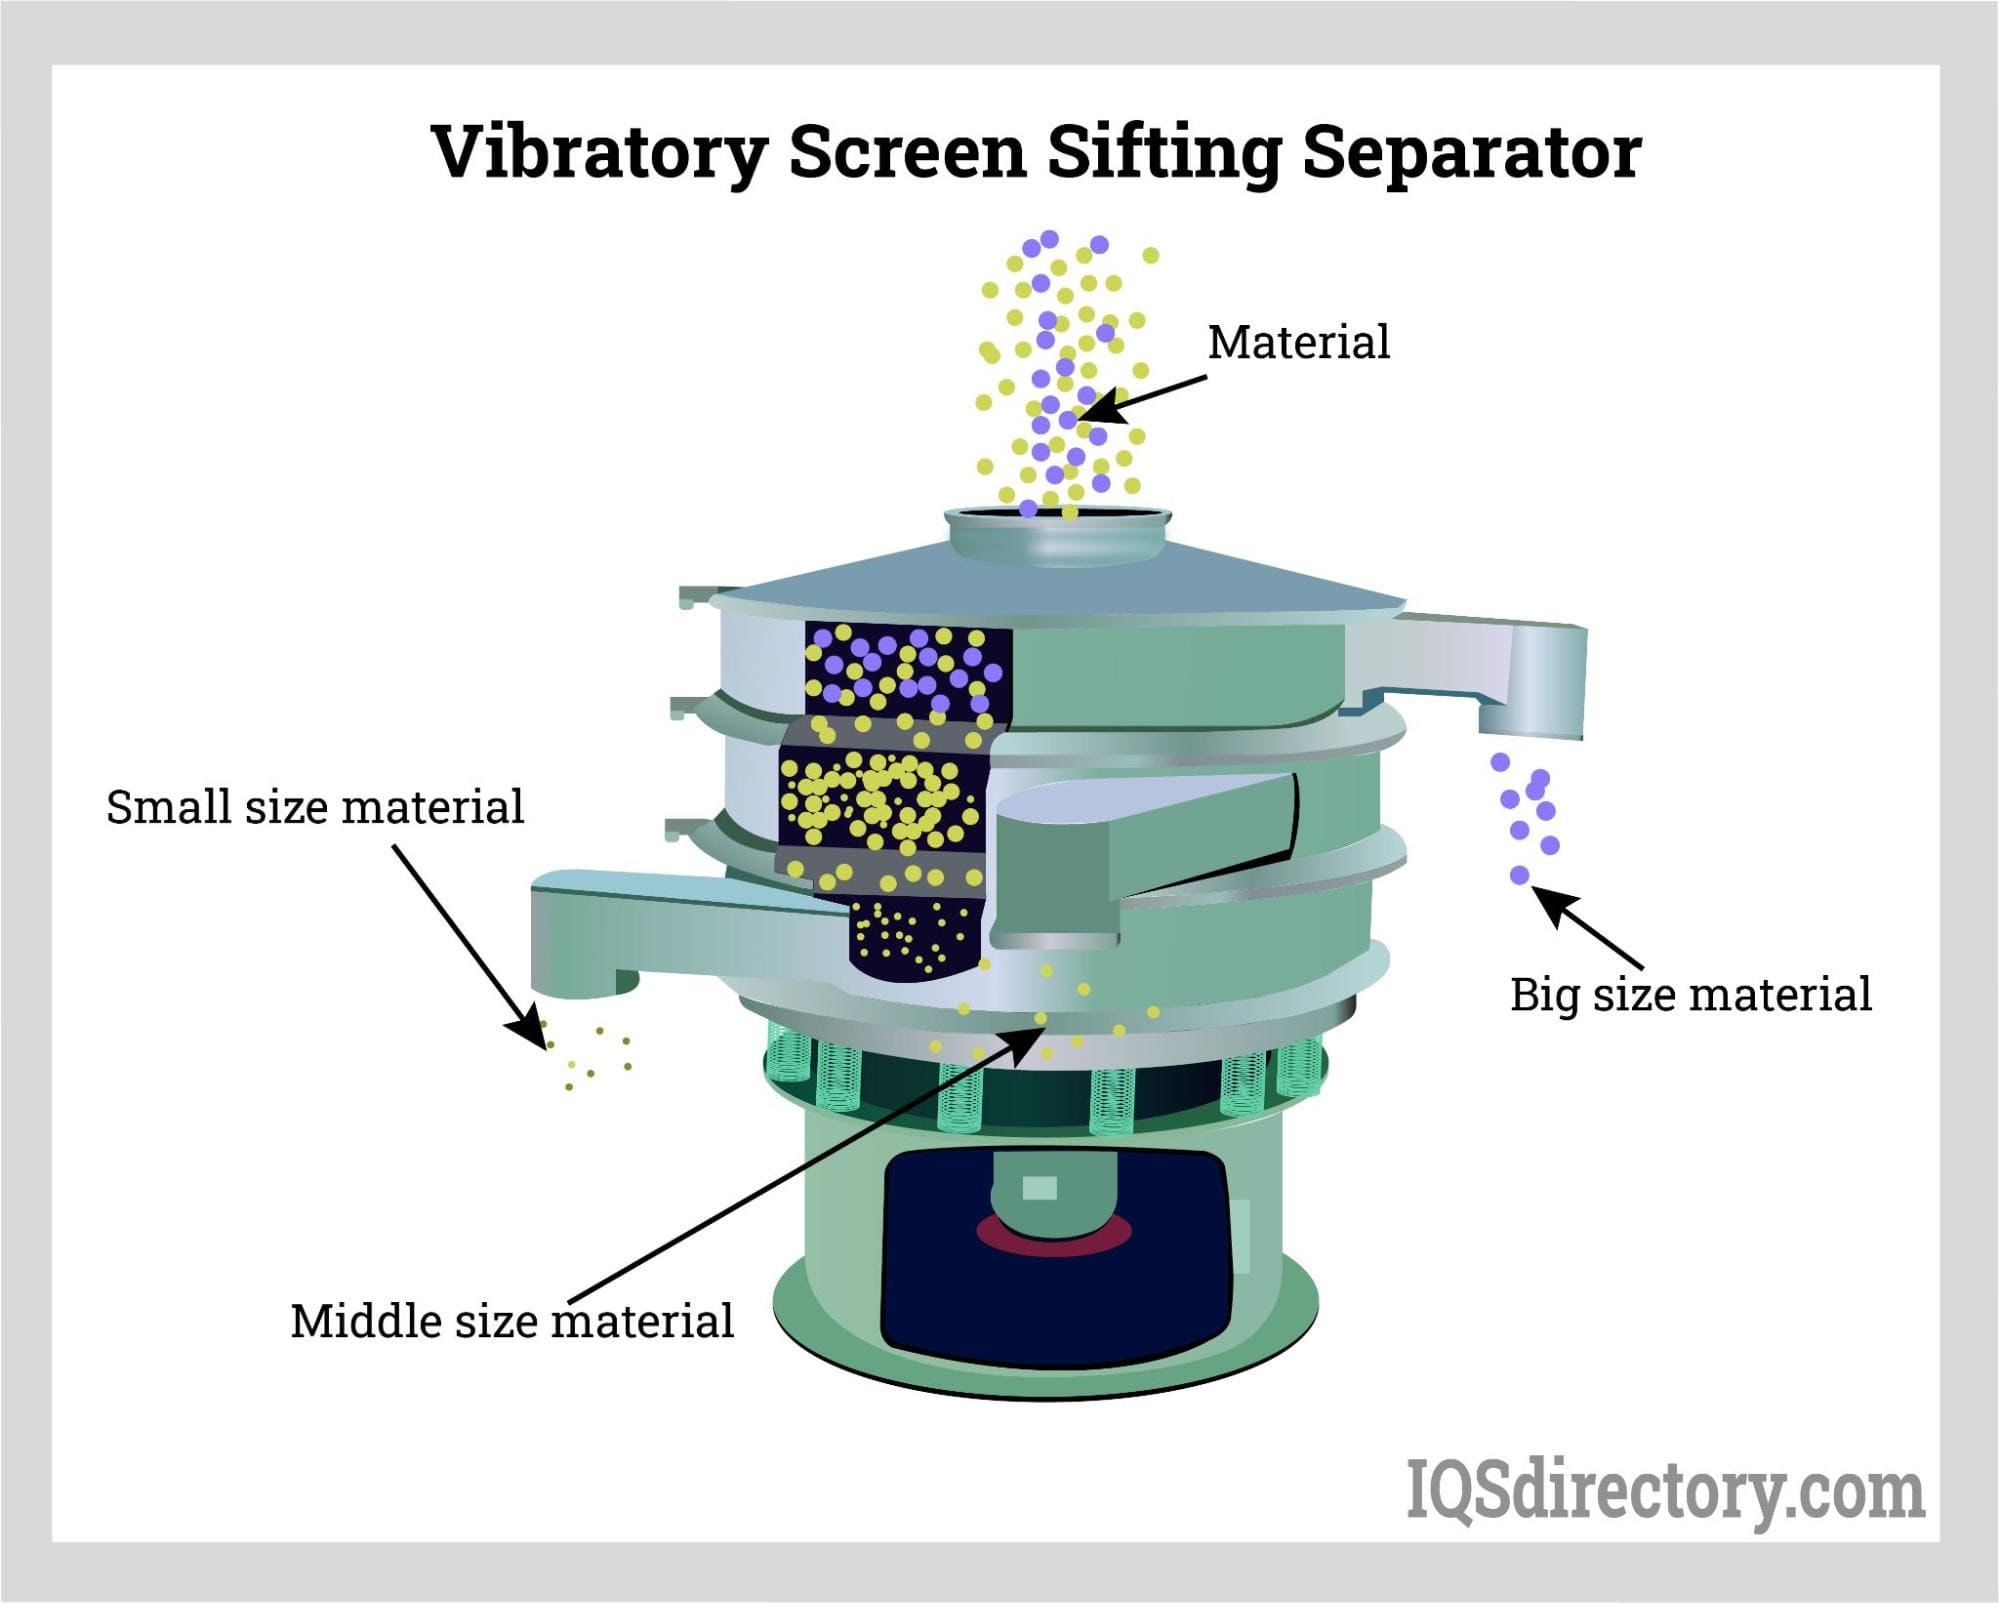 Vibratory Screener